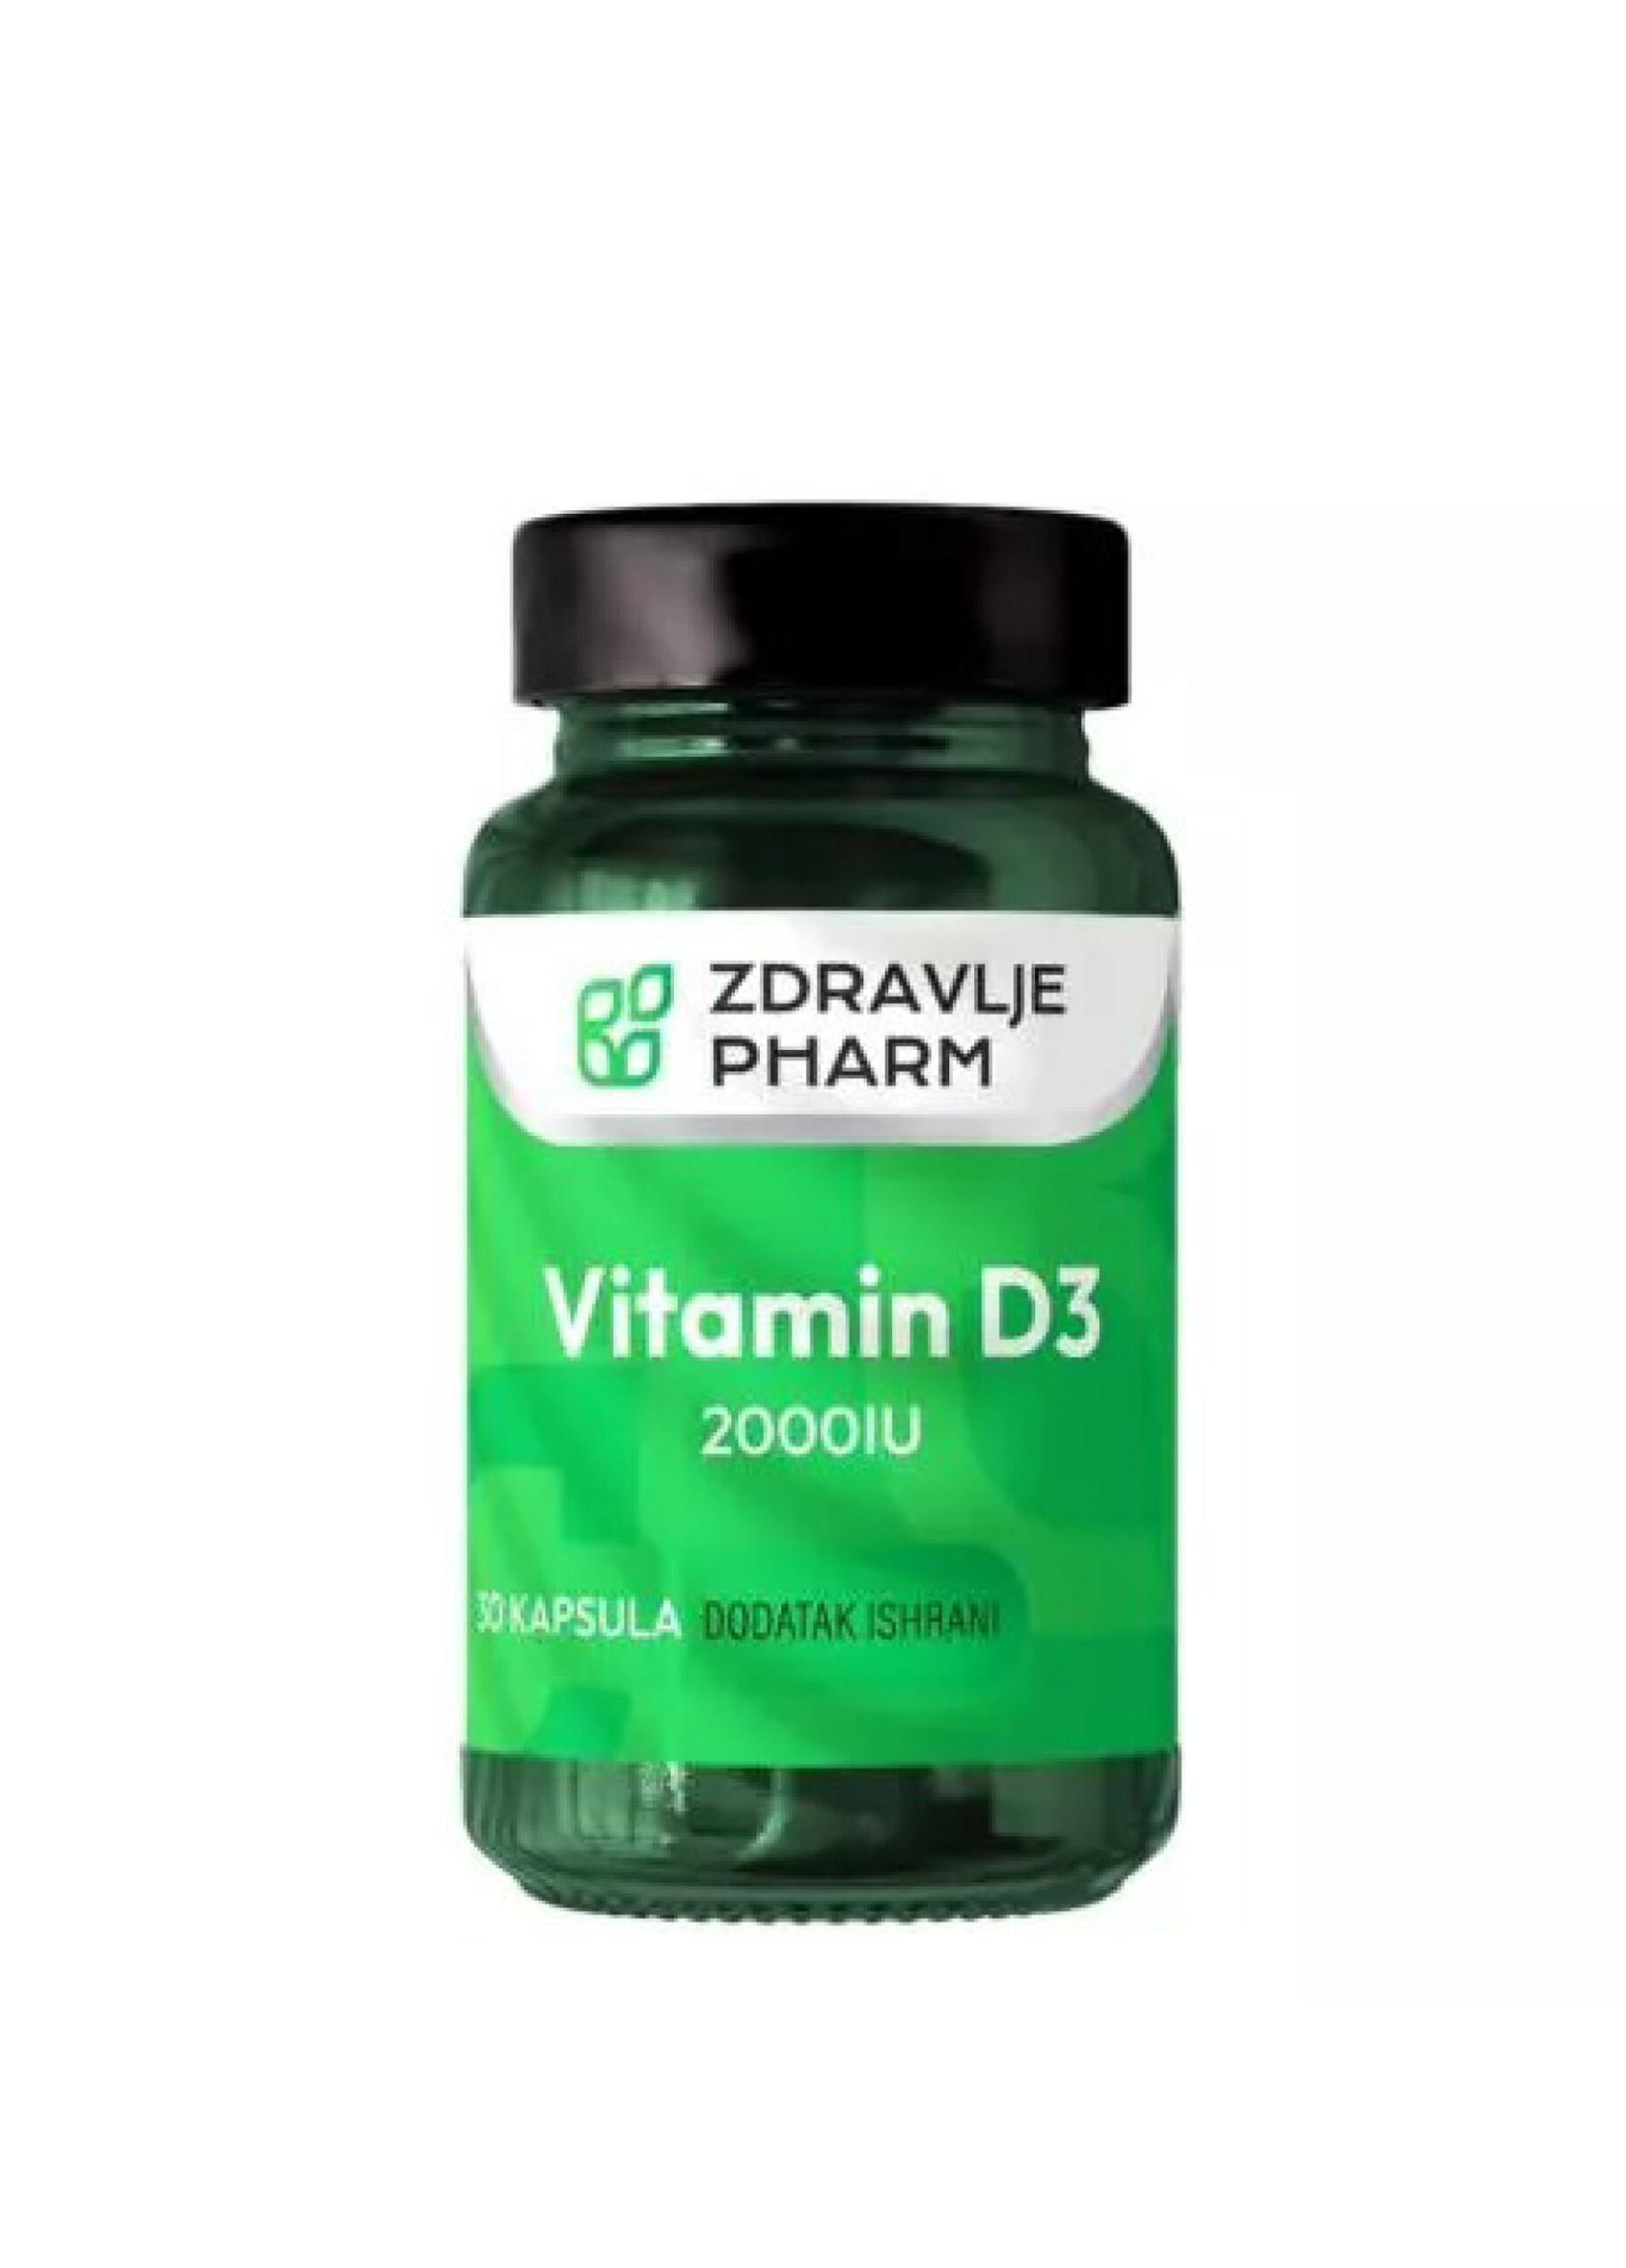 Selected image for ZDRAVLJE PHARM Vitamin D3 2000 IU